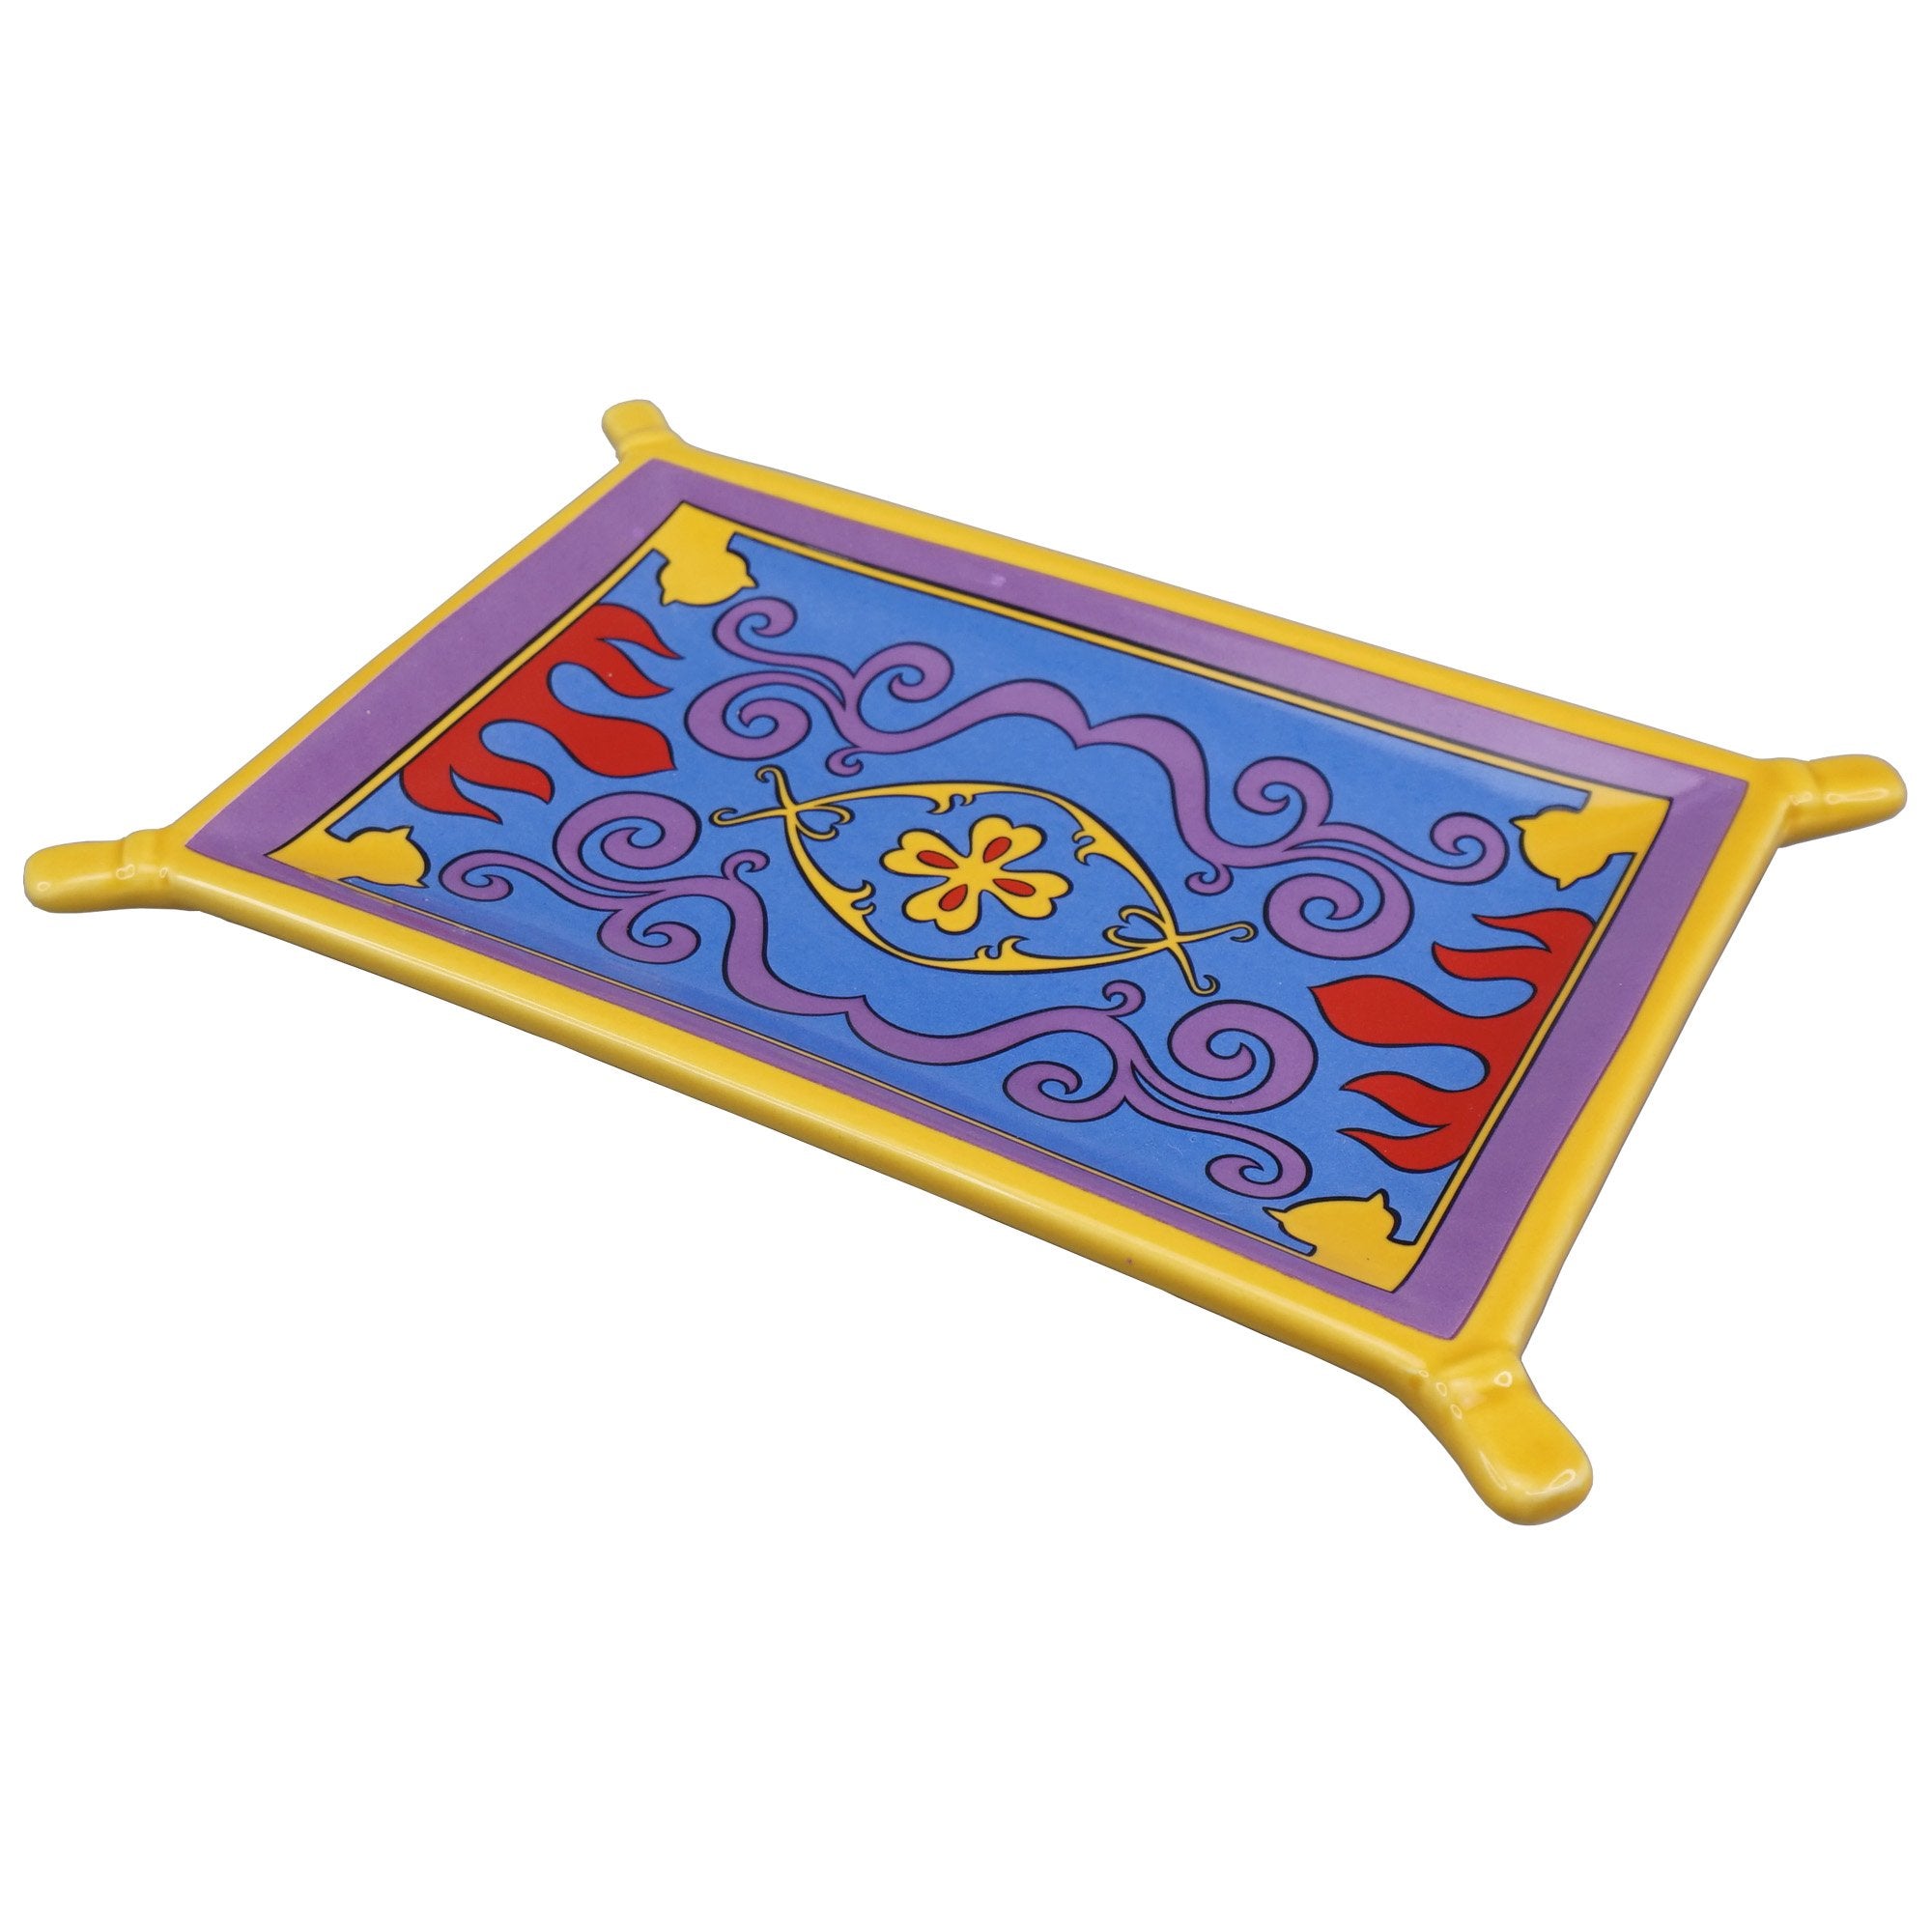 Accessory Dish Boxed - Disney Aladdin (Flying Carpet)